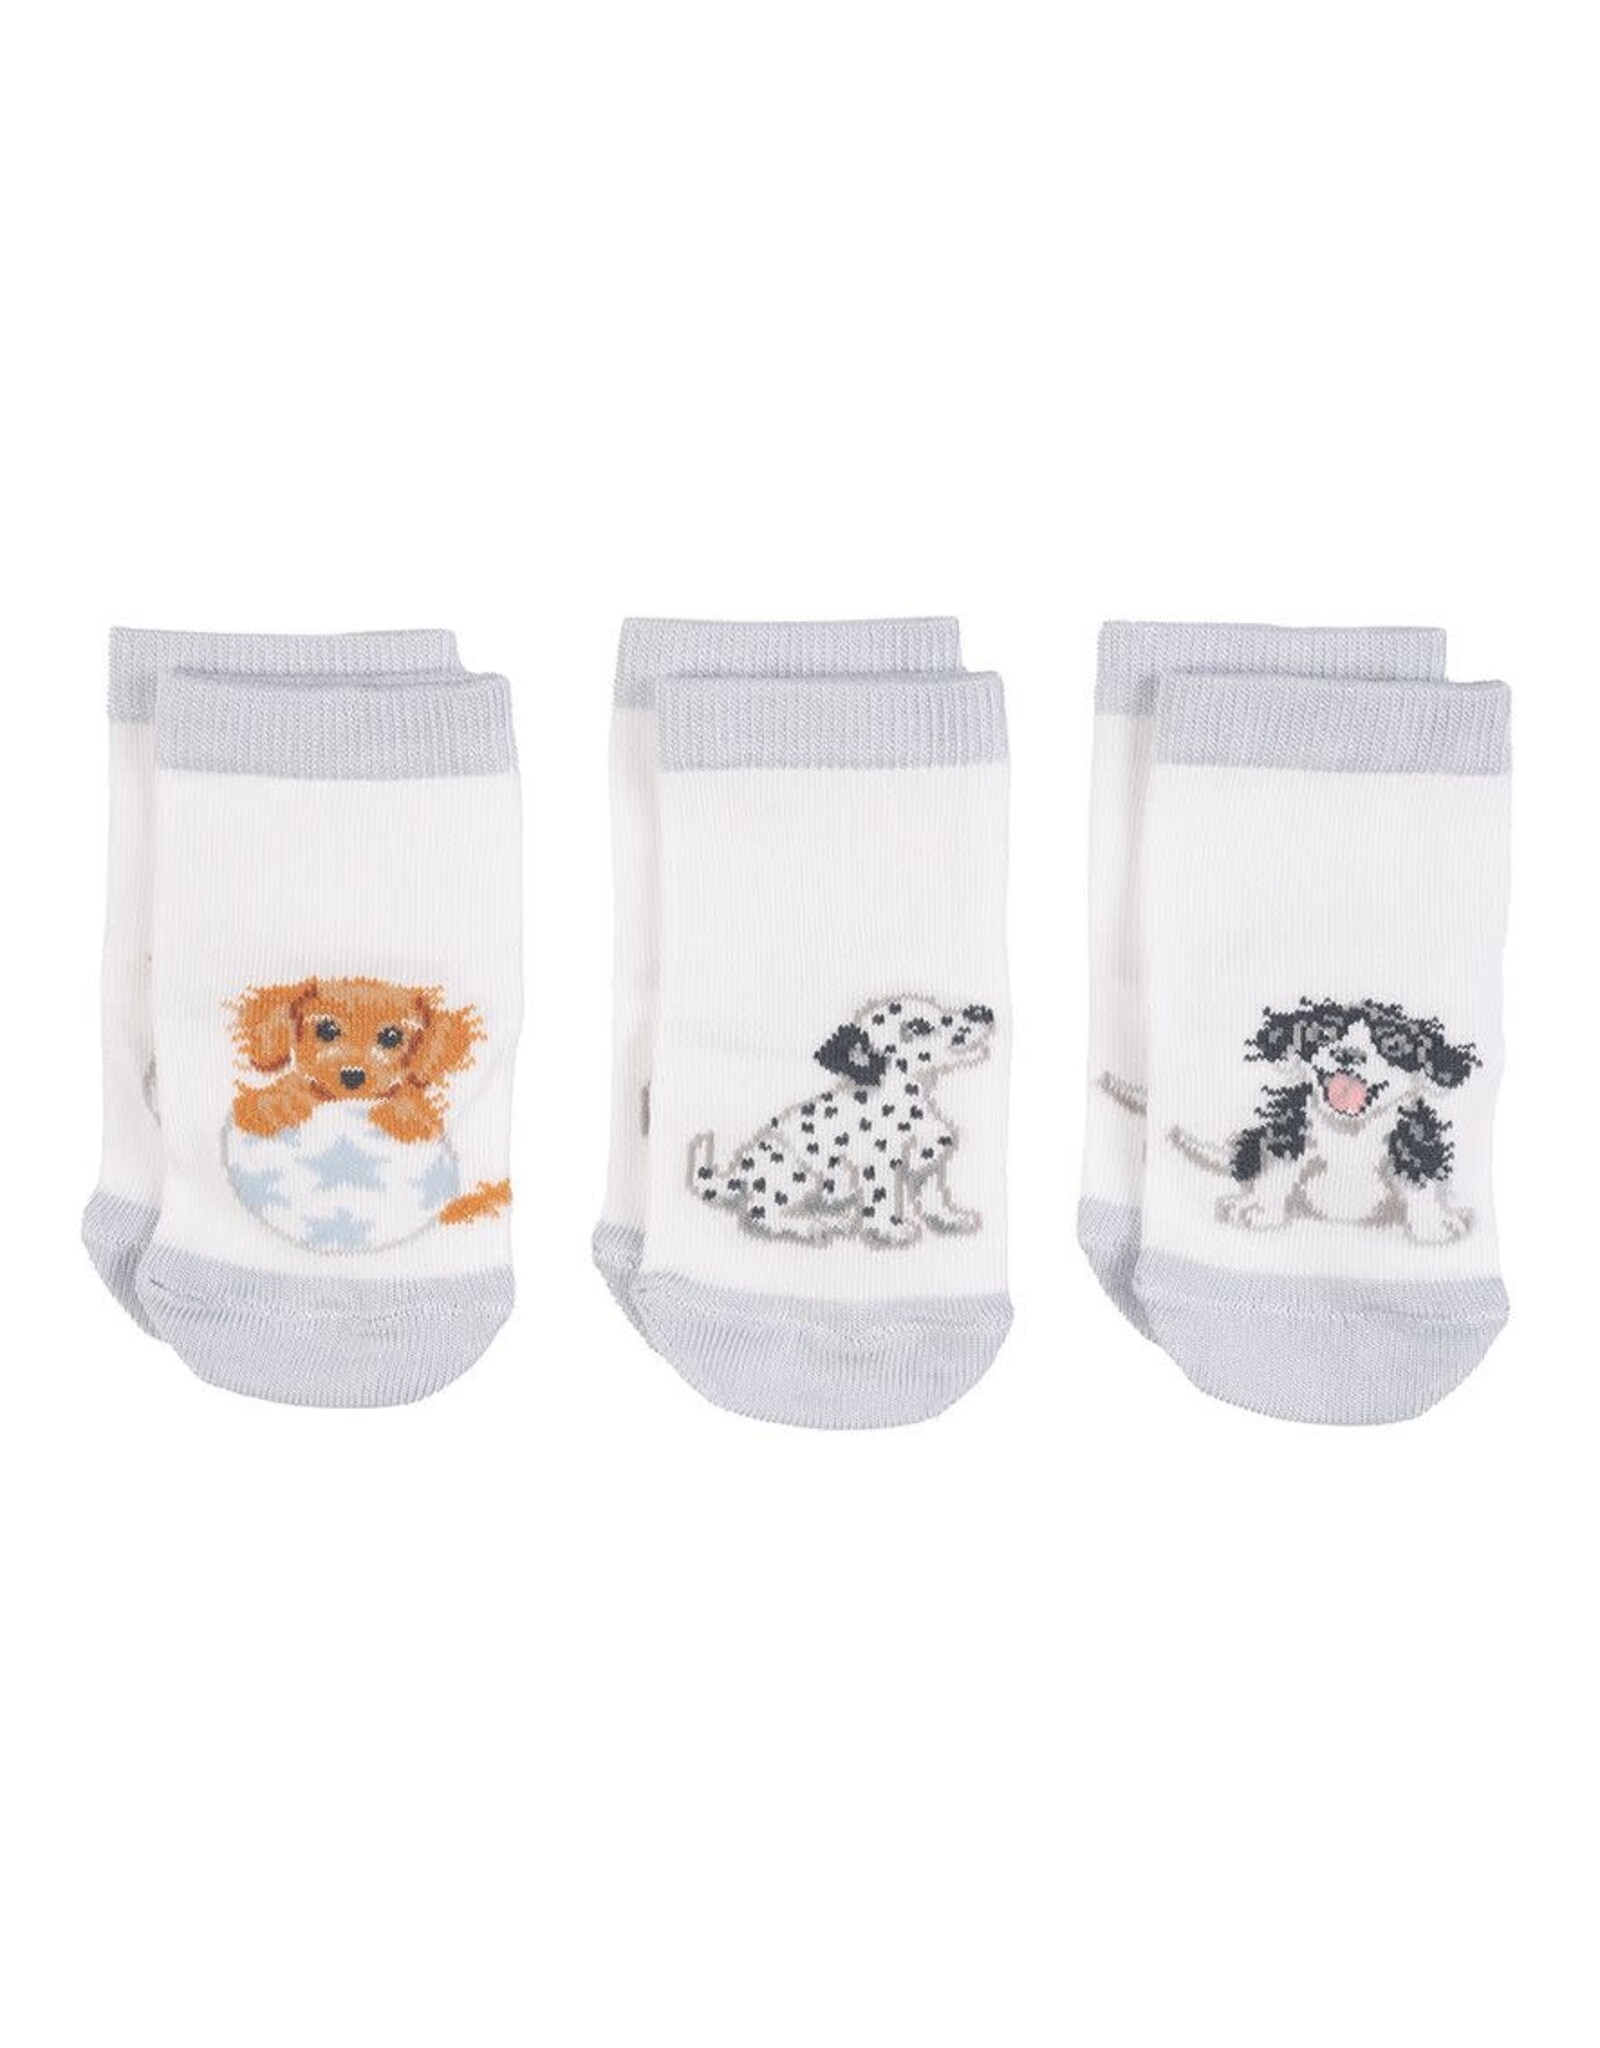 Wrendale Little Paws Baby Socks Set - 0-6 Months